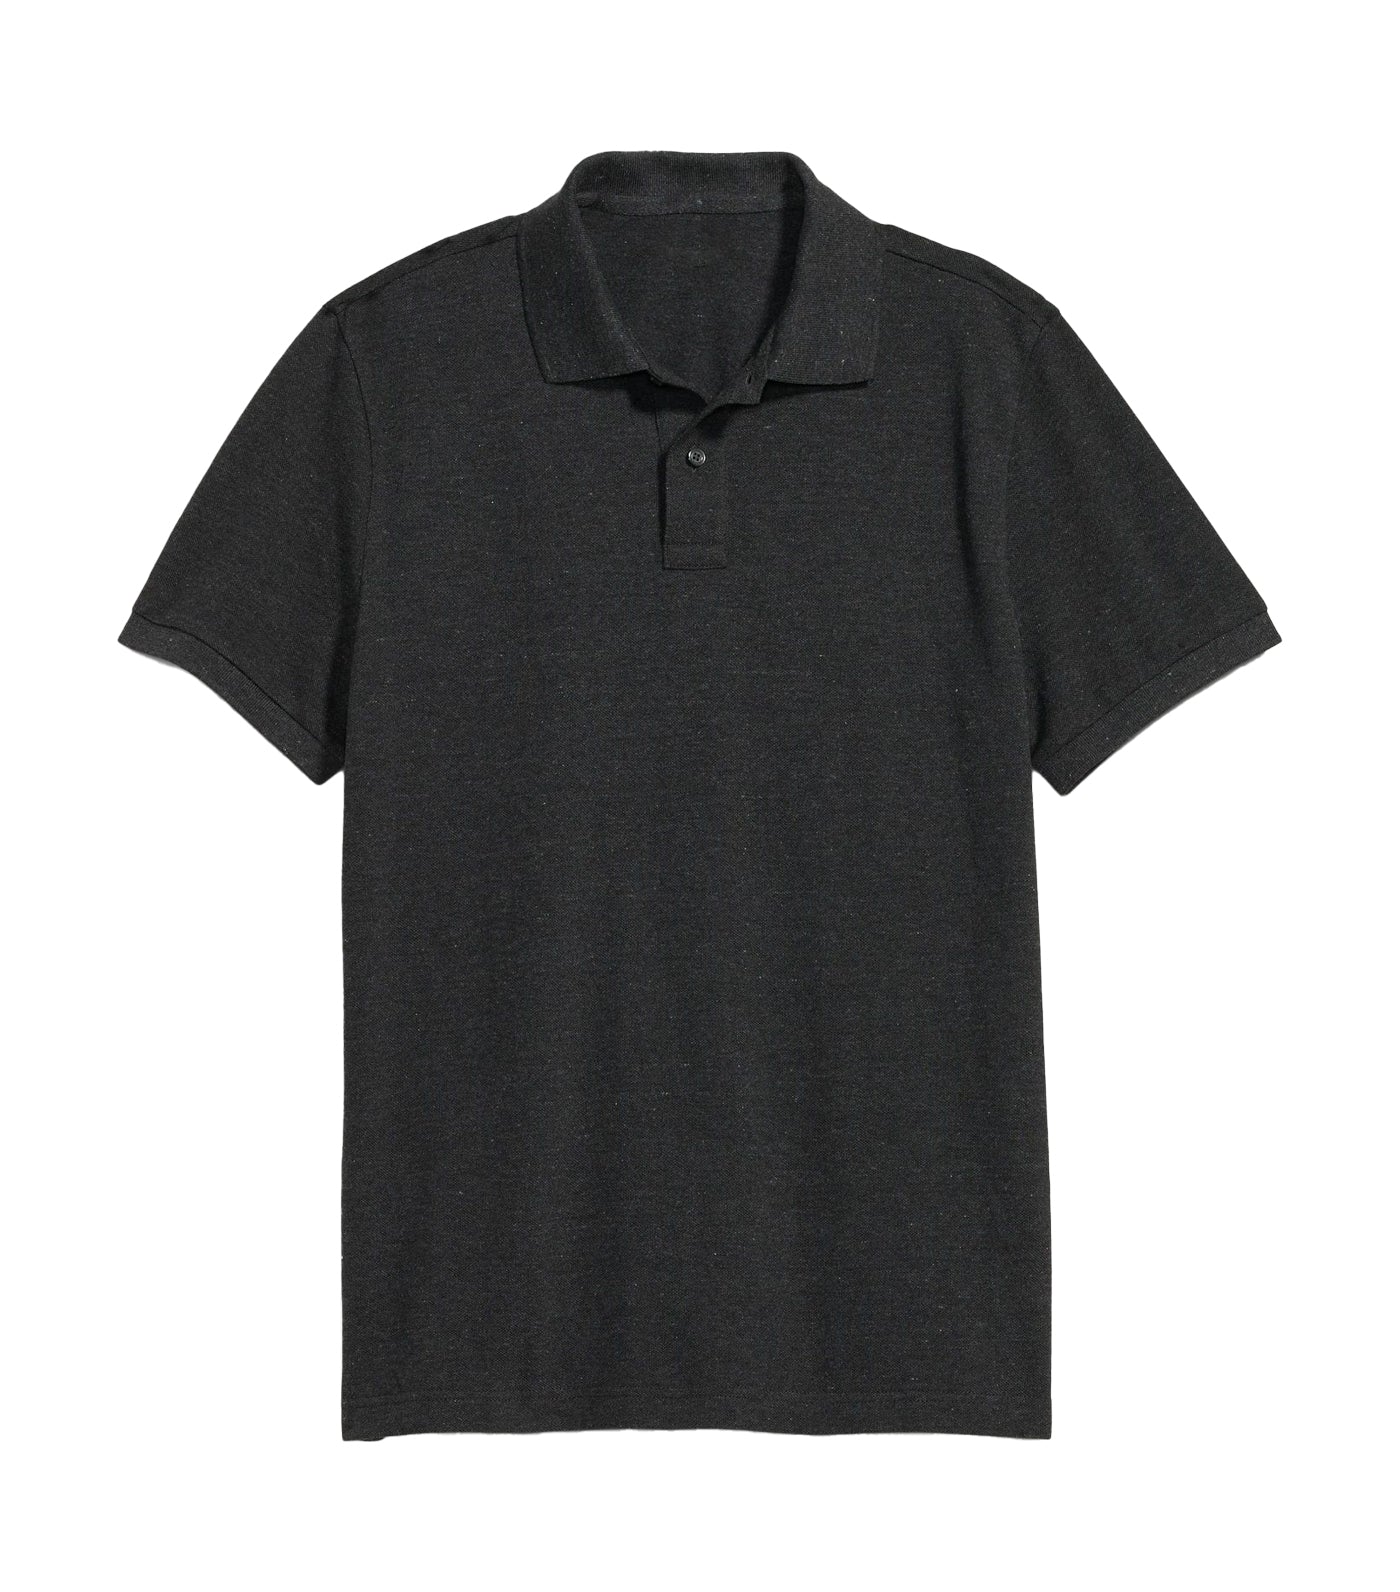 Short-Sleeve Pique Polo for Men Charcoal Heather